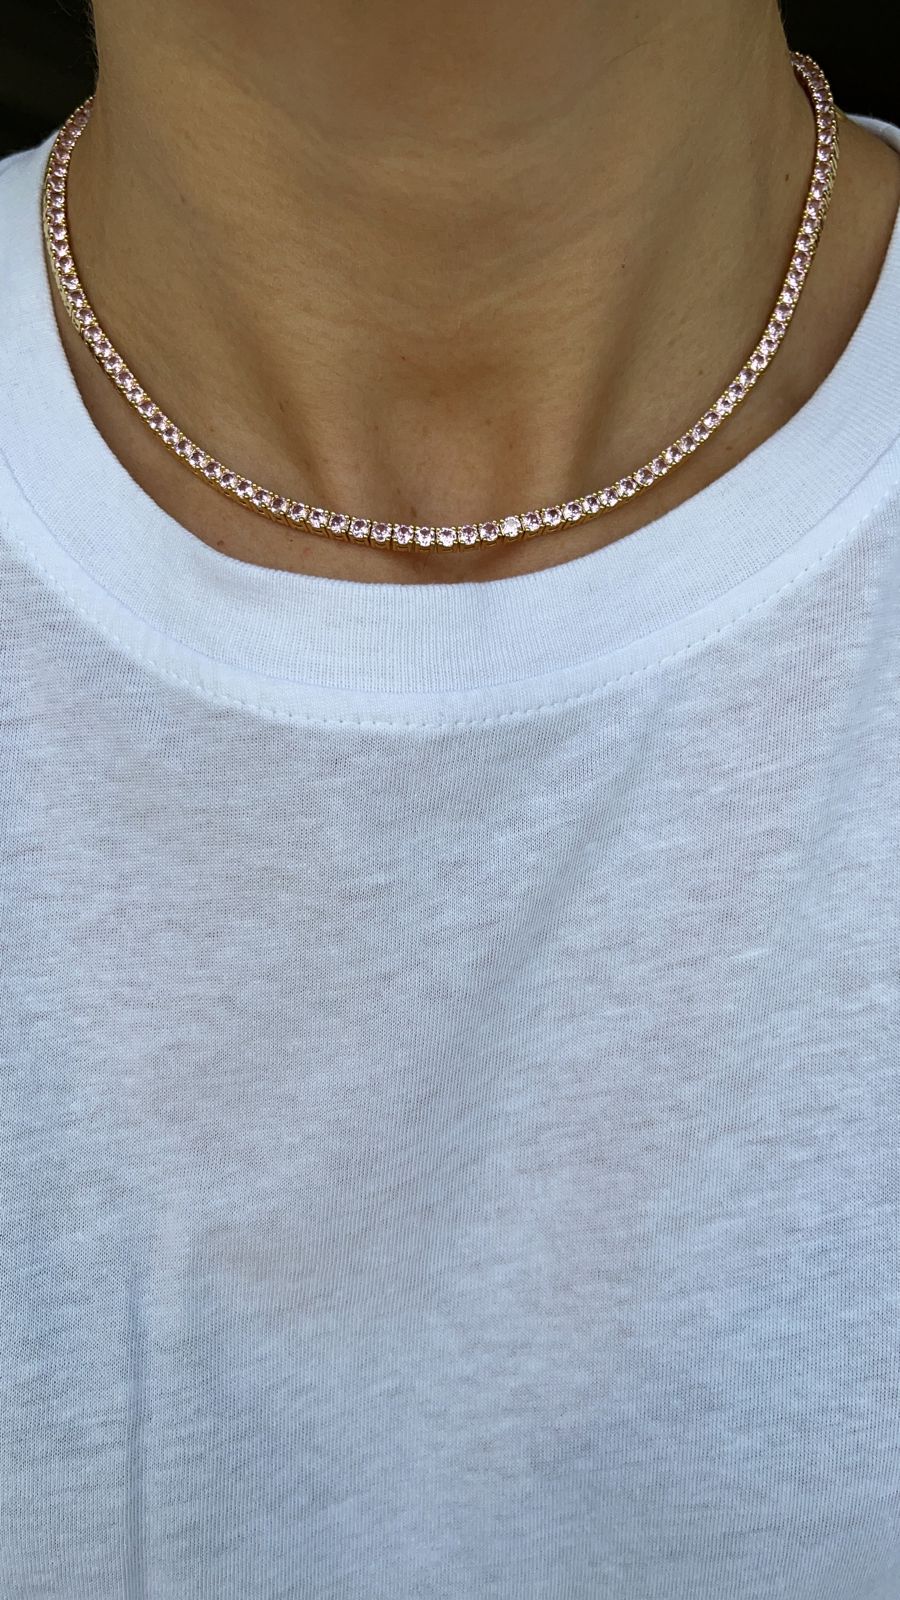 Gigi Tennis Necklace Pink/Gold 3mm